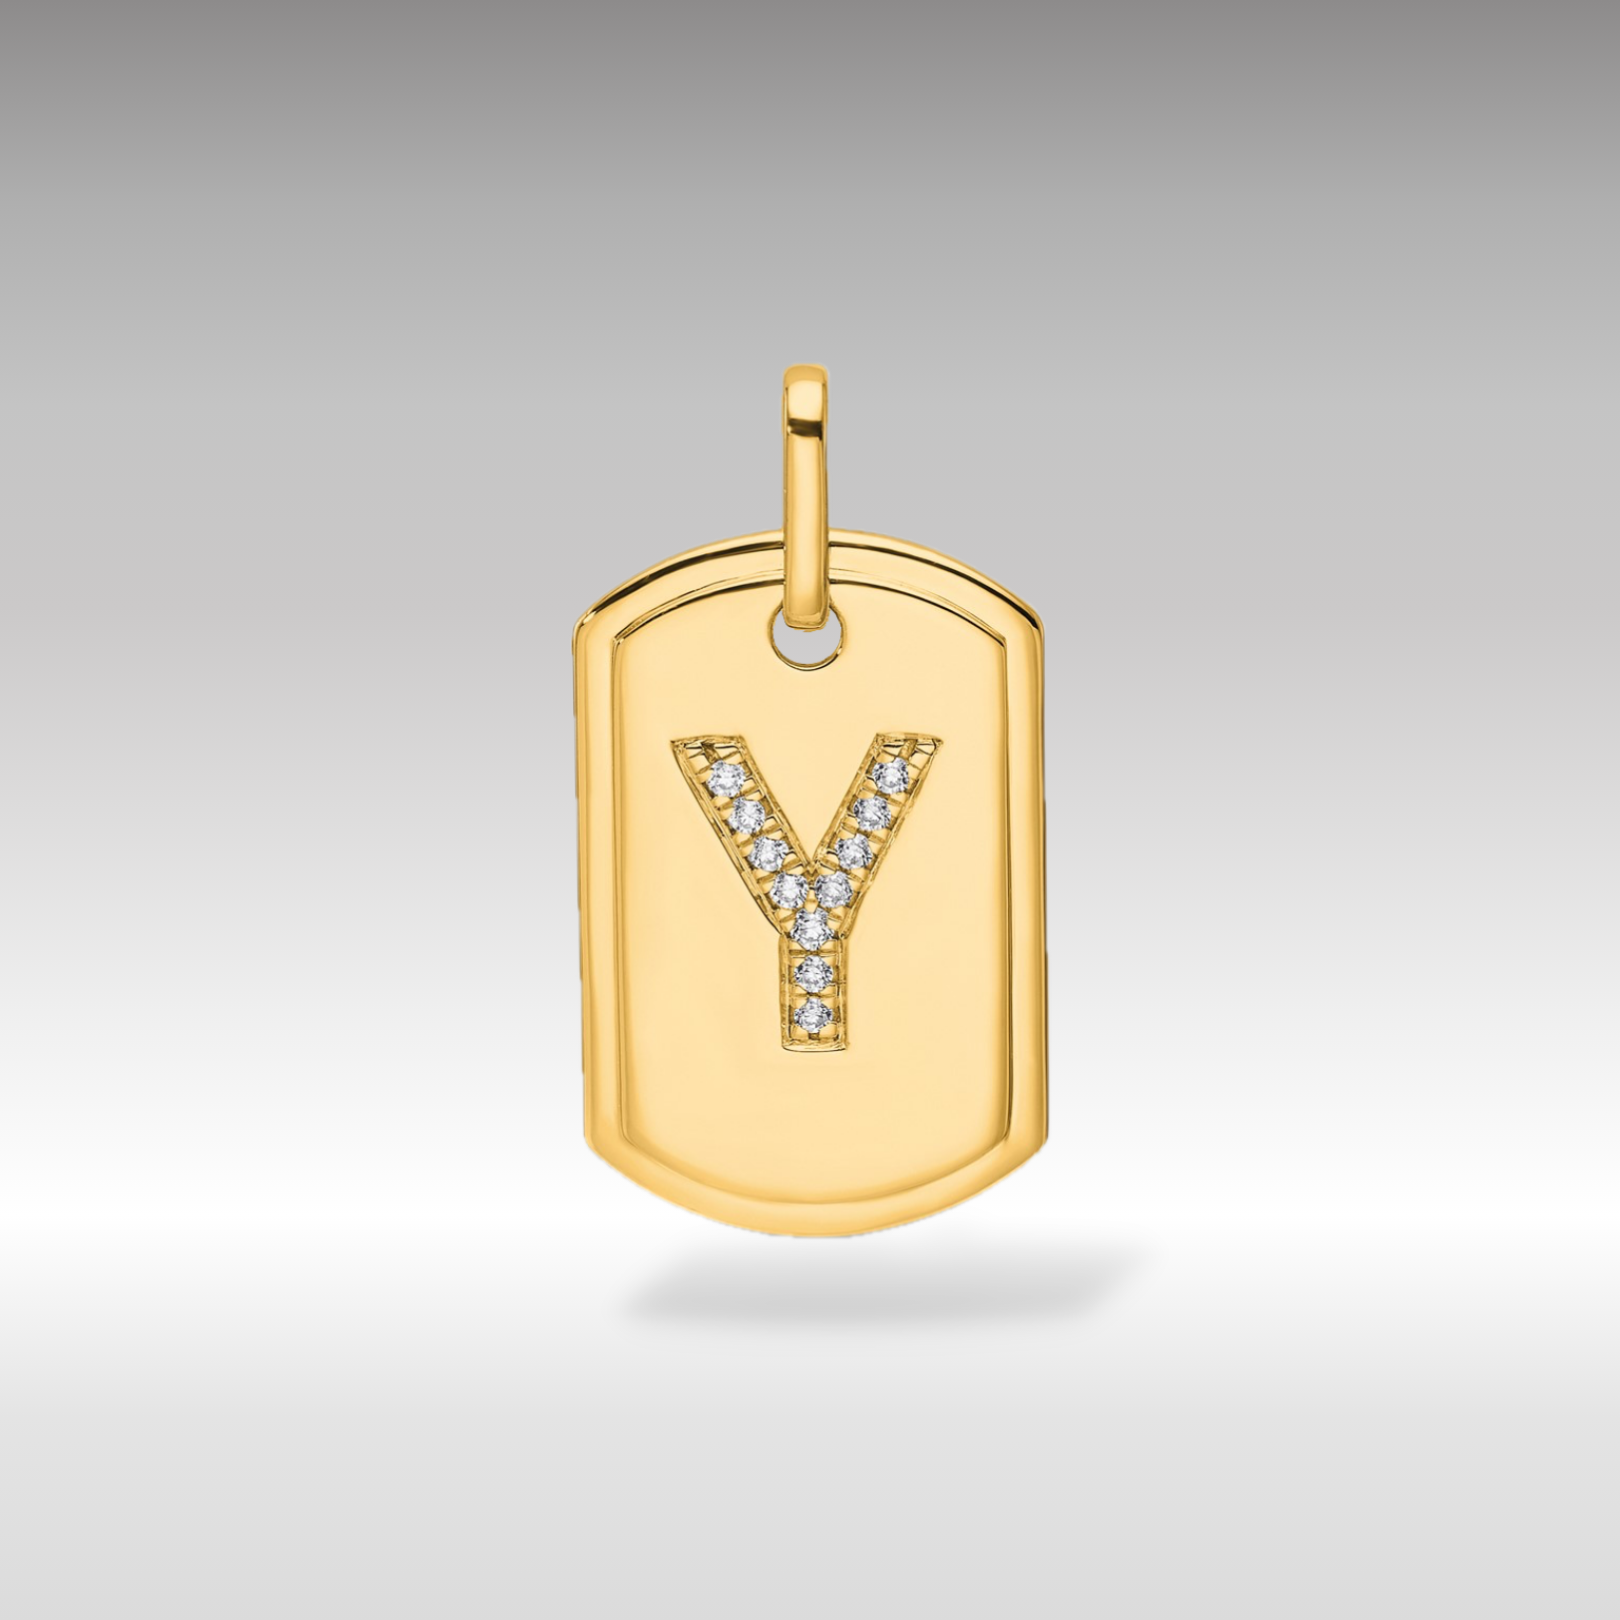 14K Gold Initial "Y" Dog Tag With Genuine Diamonds - Charlie & Co. Jewelry